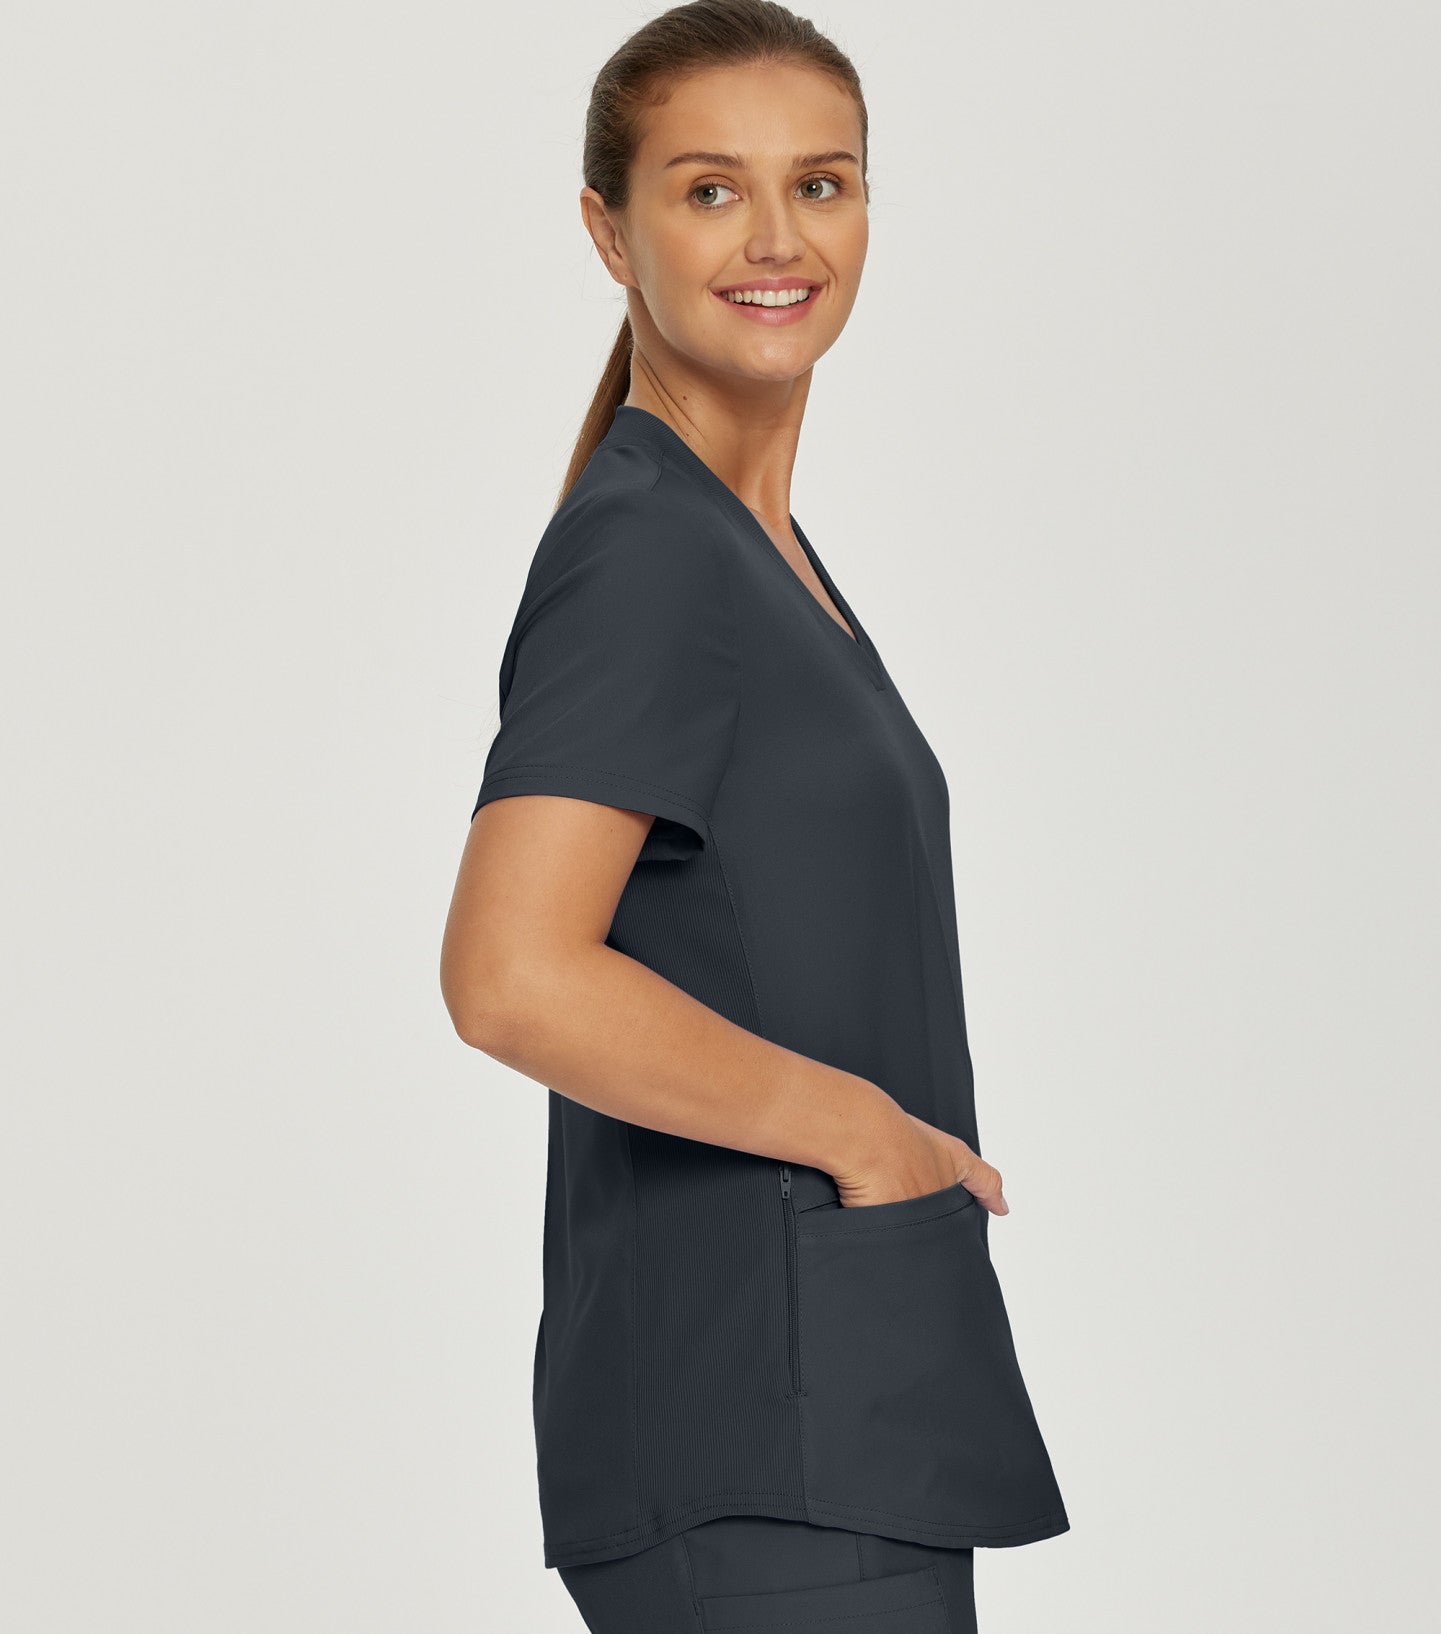 women's medical uniform tops, fashionable nurses uniforms, Women's Landau Forward 3-Pocket V-Neck Scrub Top